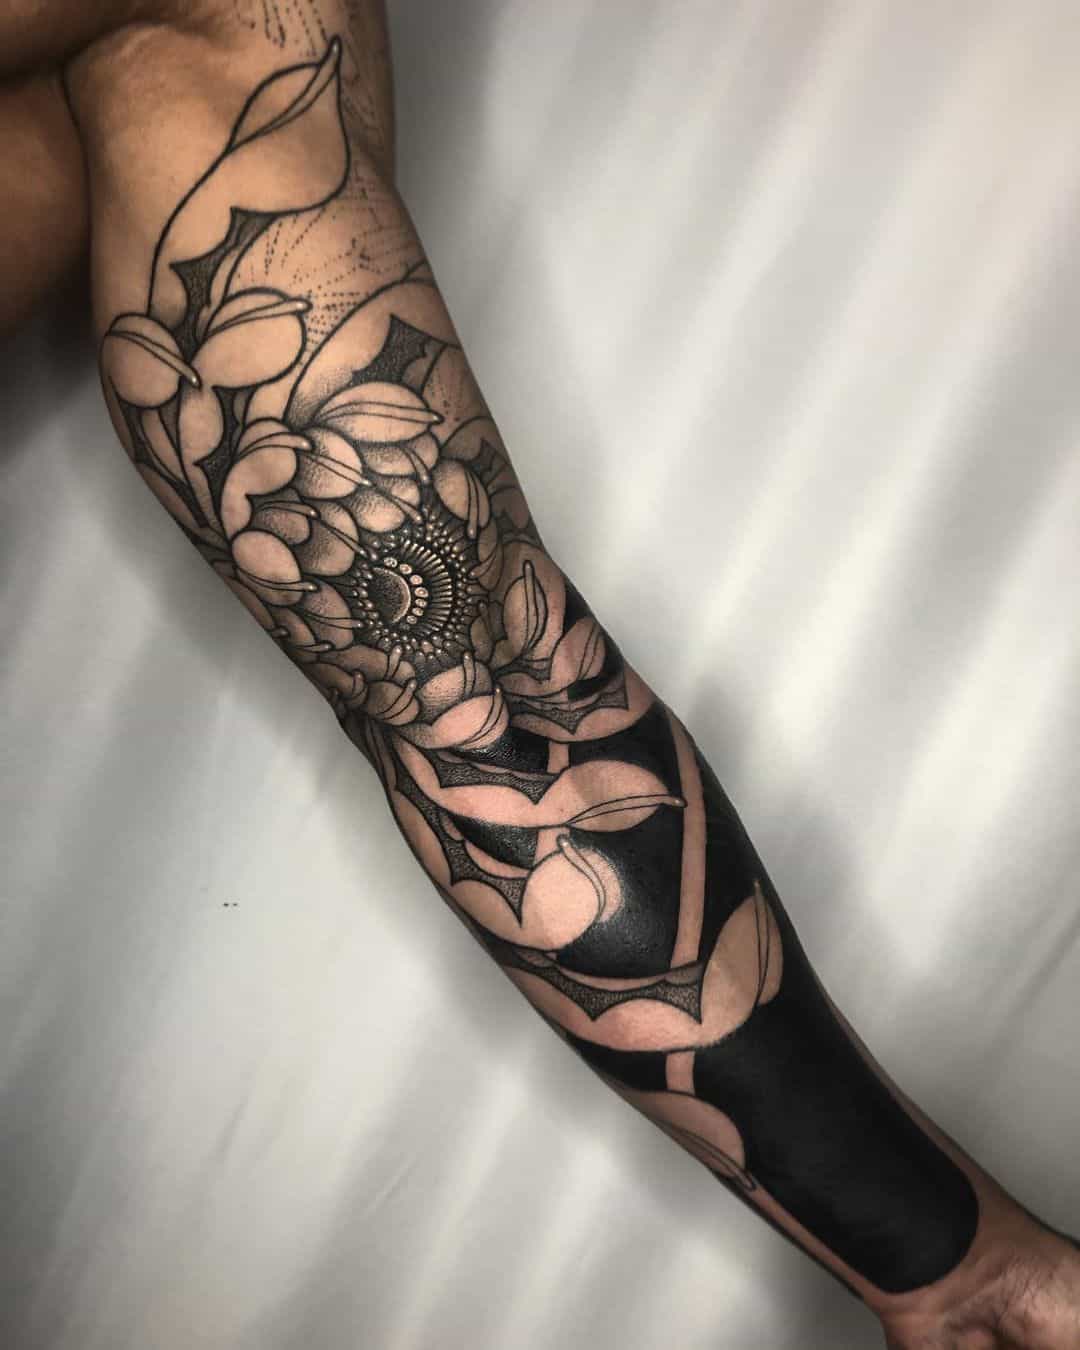 Amazing tattoo on arm by monsieur berdah